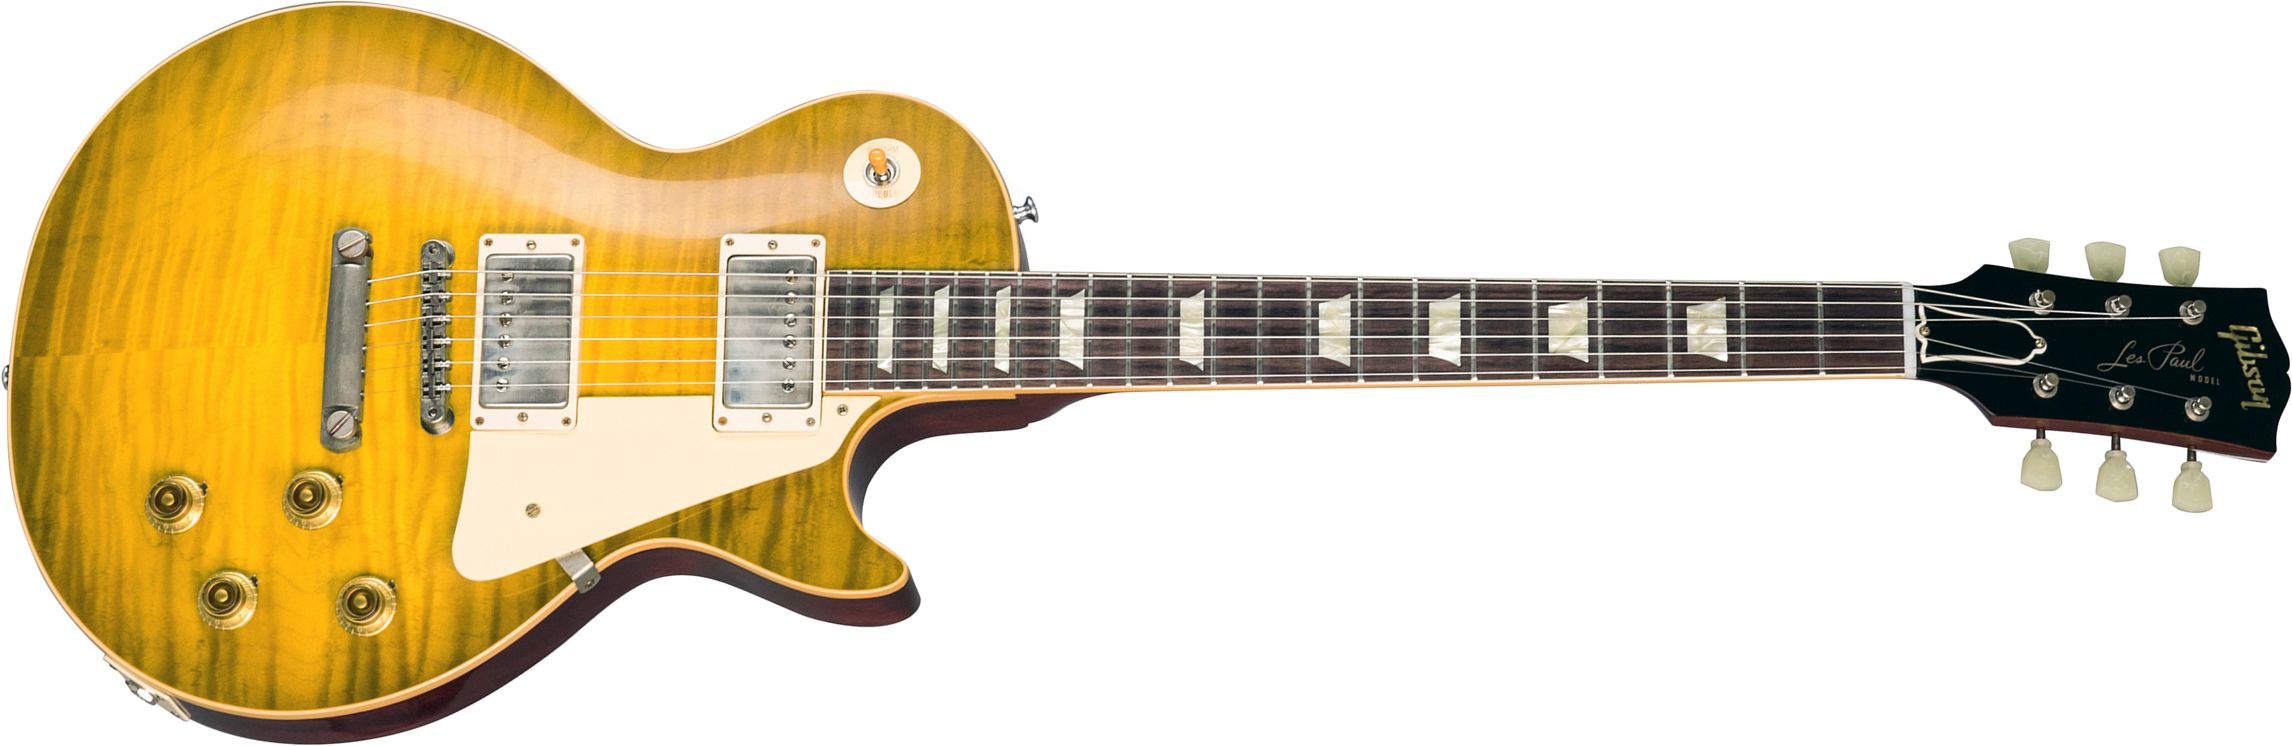 Gibson Custom Shop Les Paul Standard 1959 60th Anniversary Bolivian Rw - Green Lemon Fade - Single cut electric guitar - Main picture